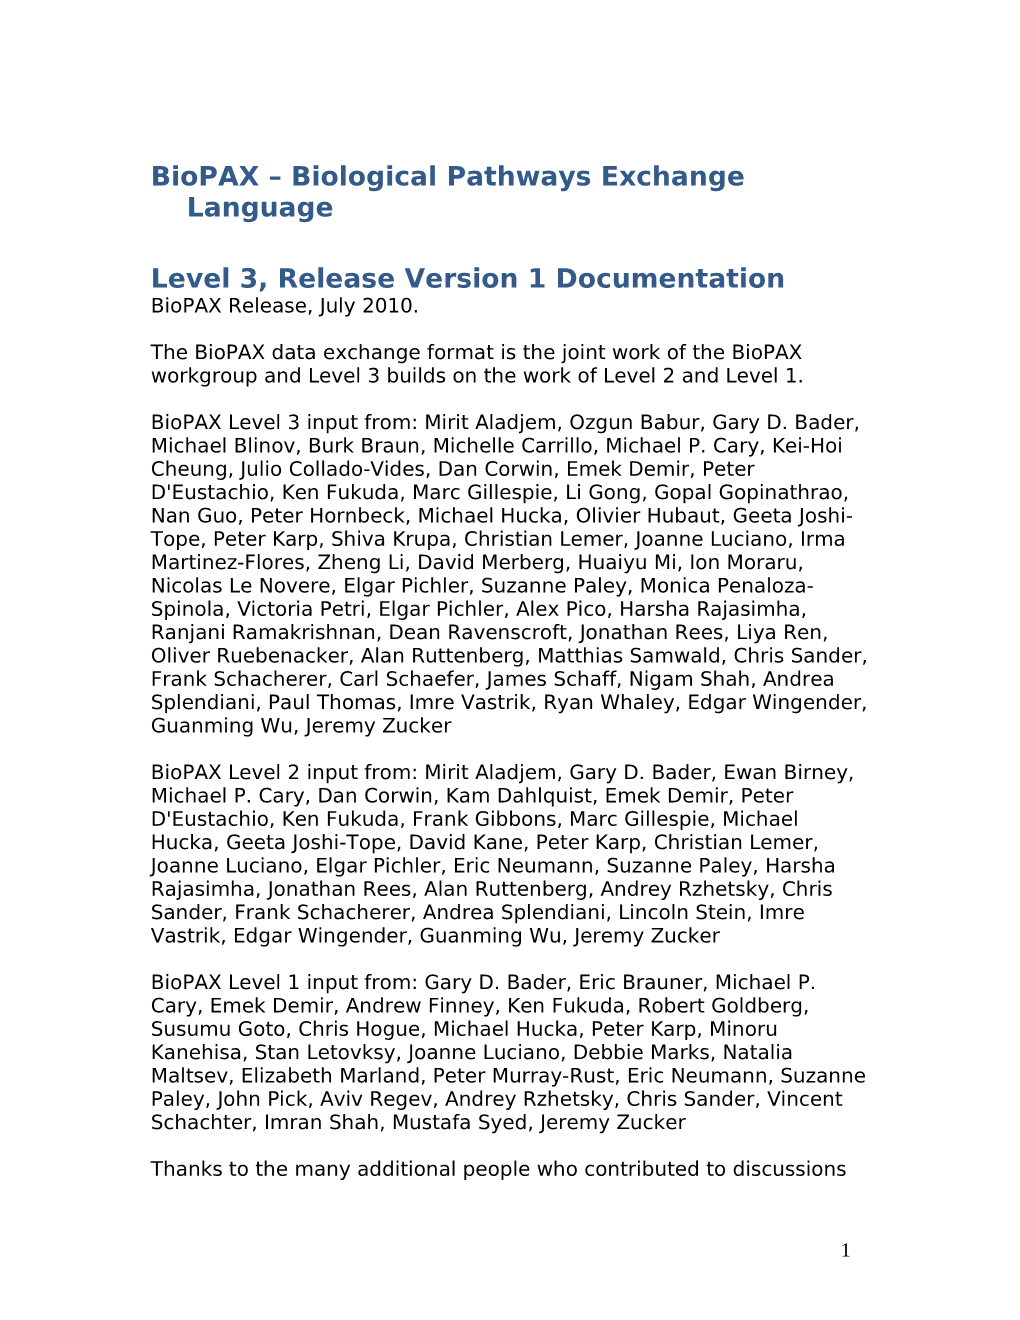 Biological Pathways Exchange Language Level 3, Release Version 1 Documentation